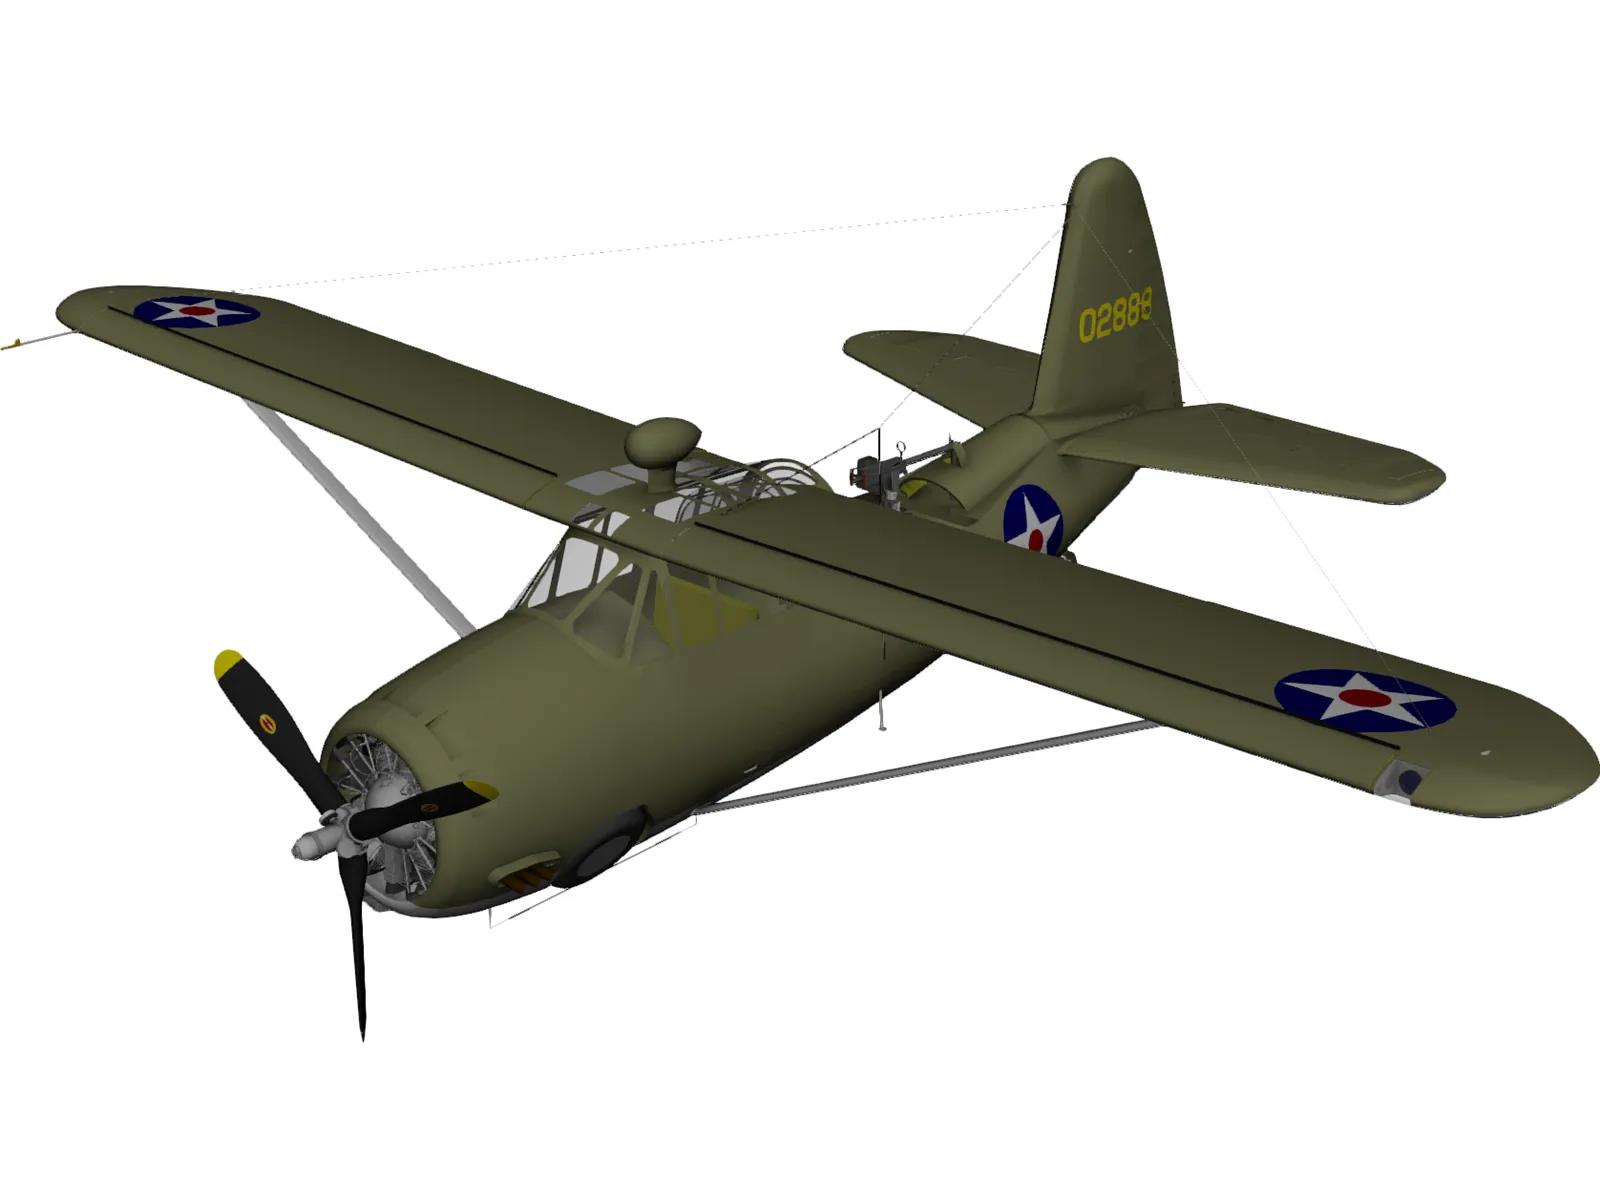 Curtiss O-52 Owl 3D Model